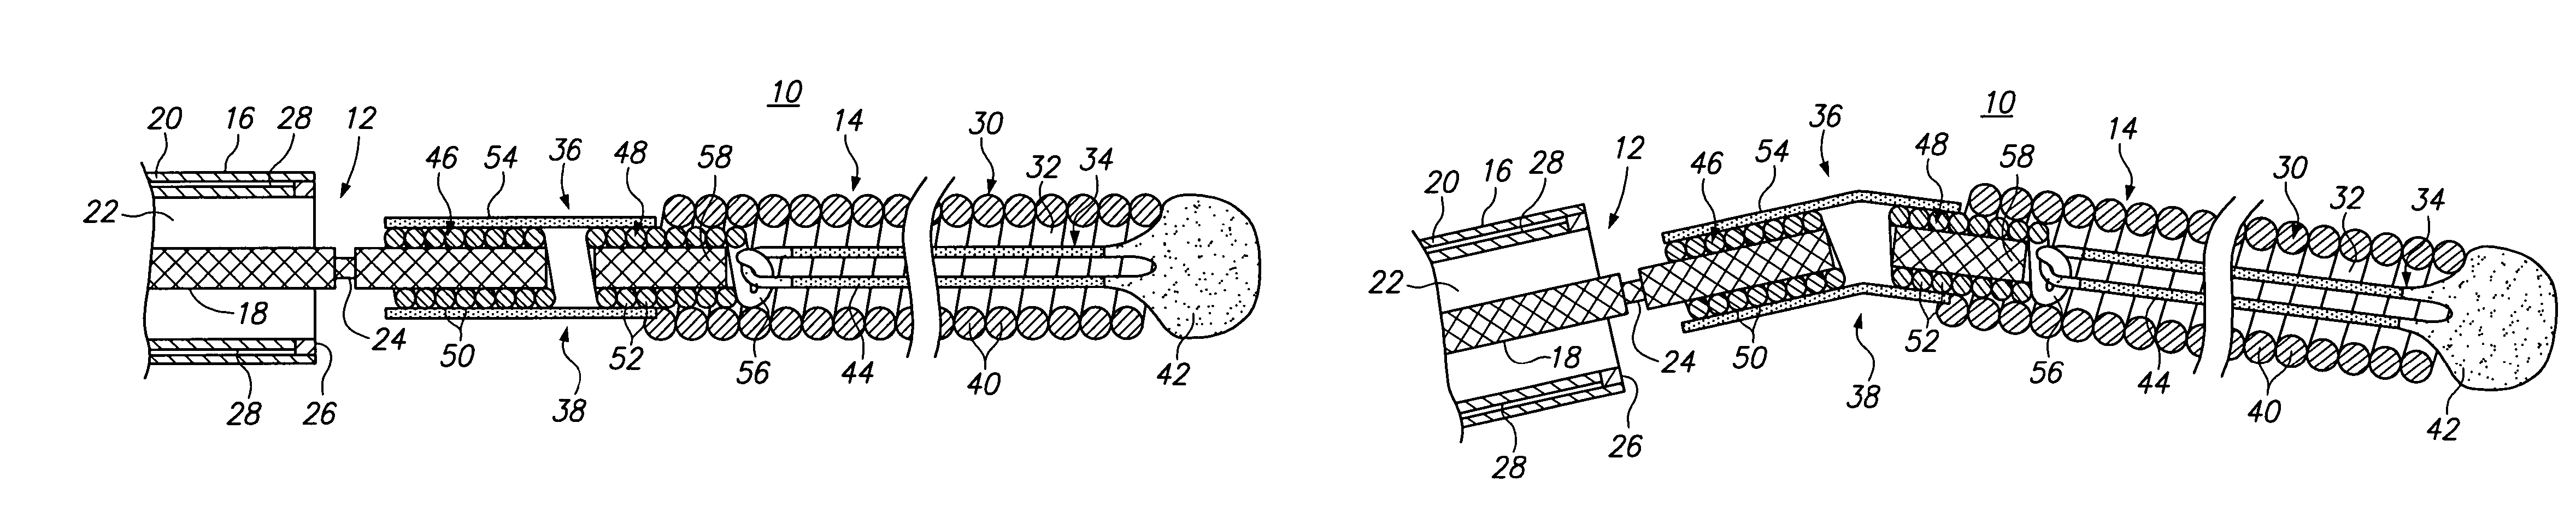 Vaso-occlusive device having pivotable coupling